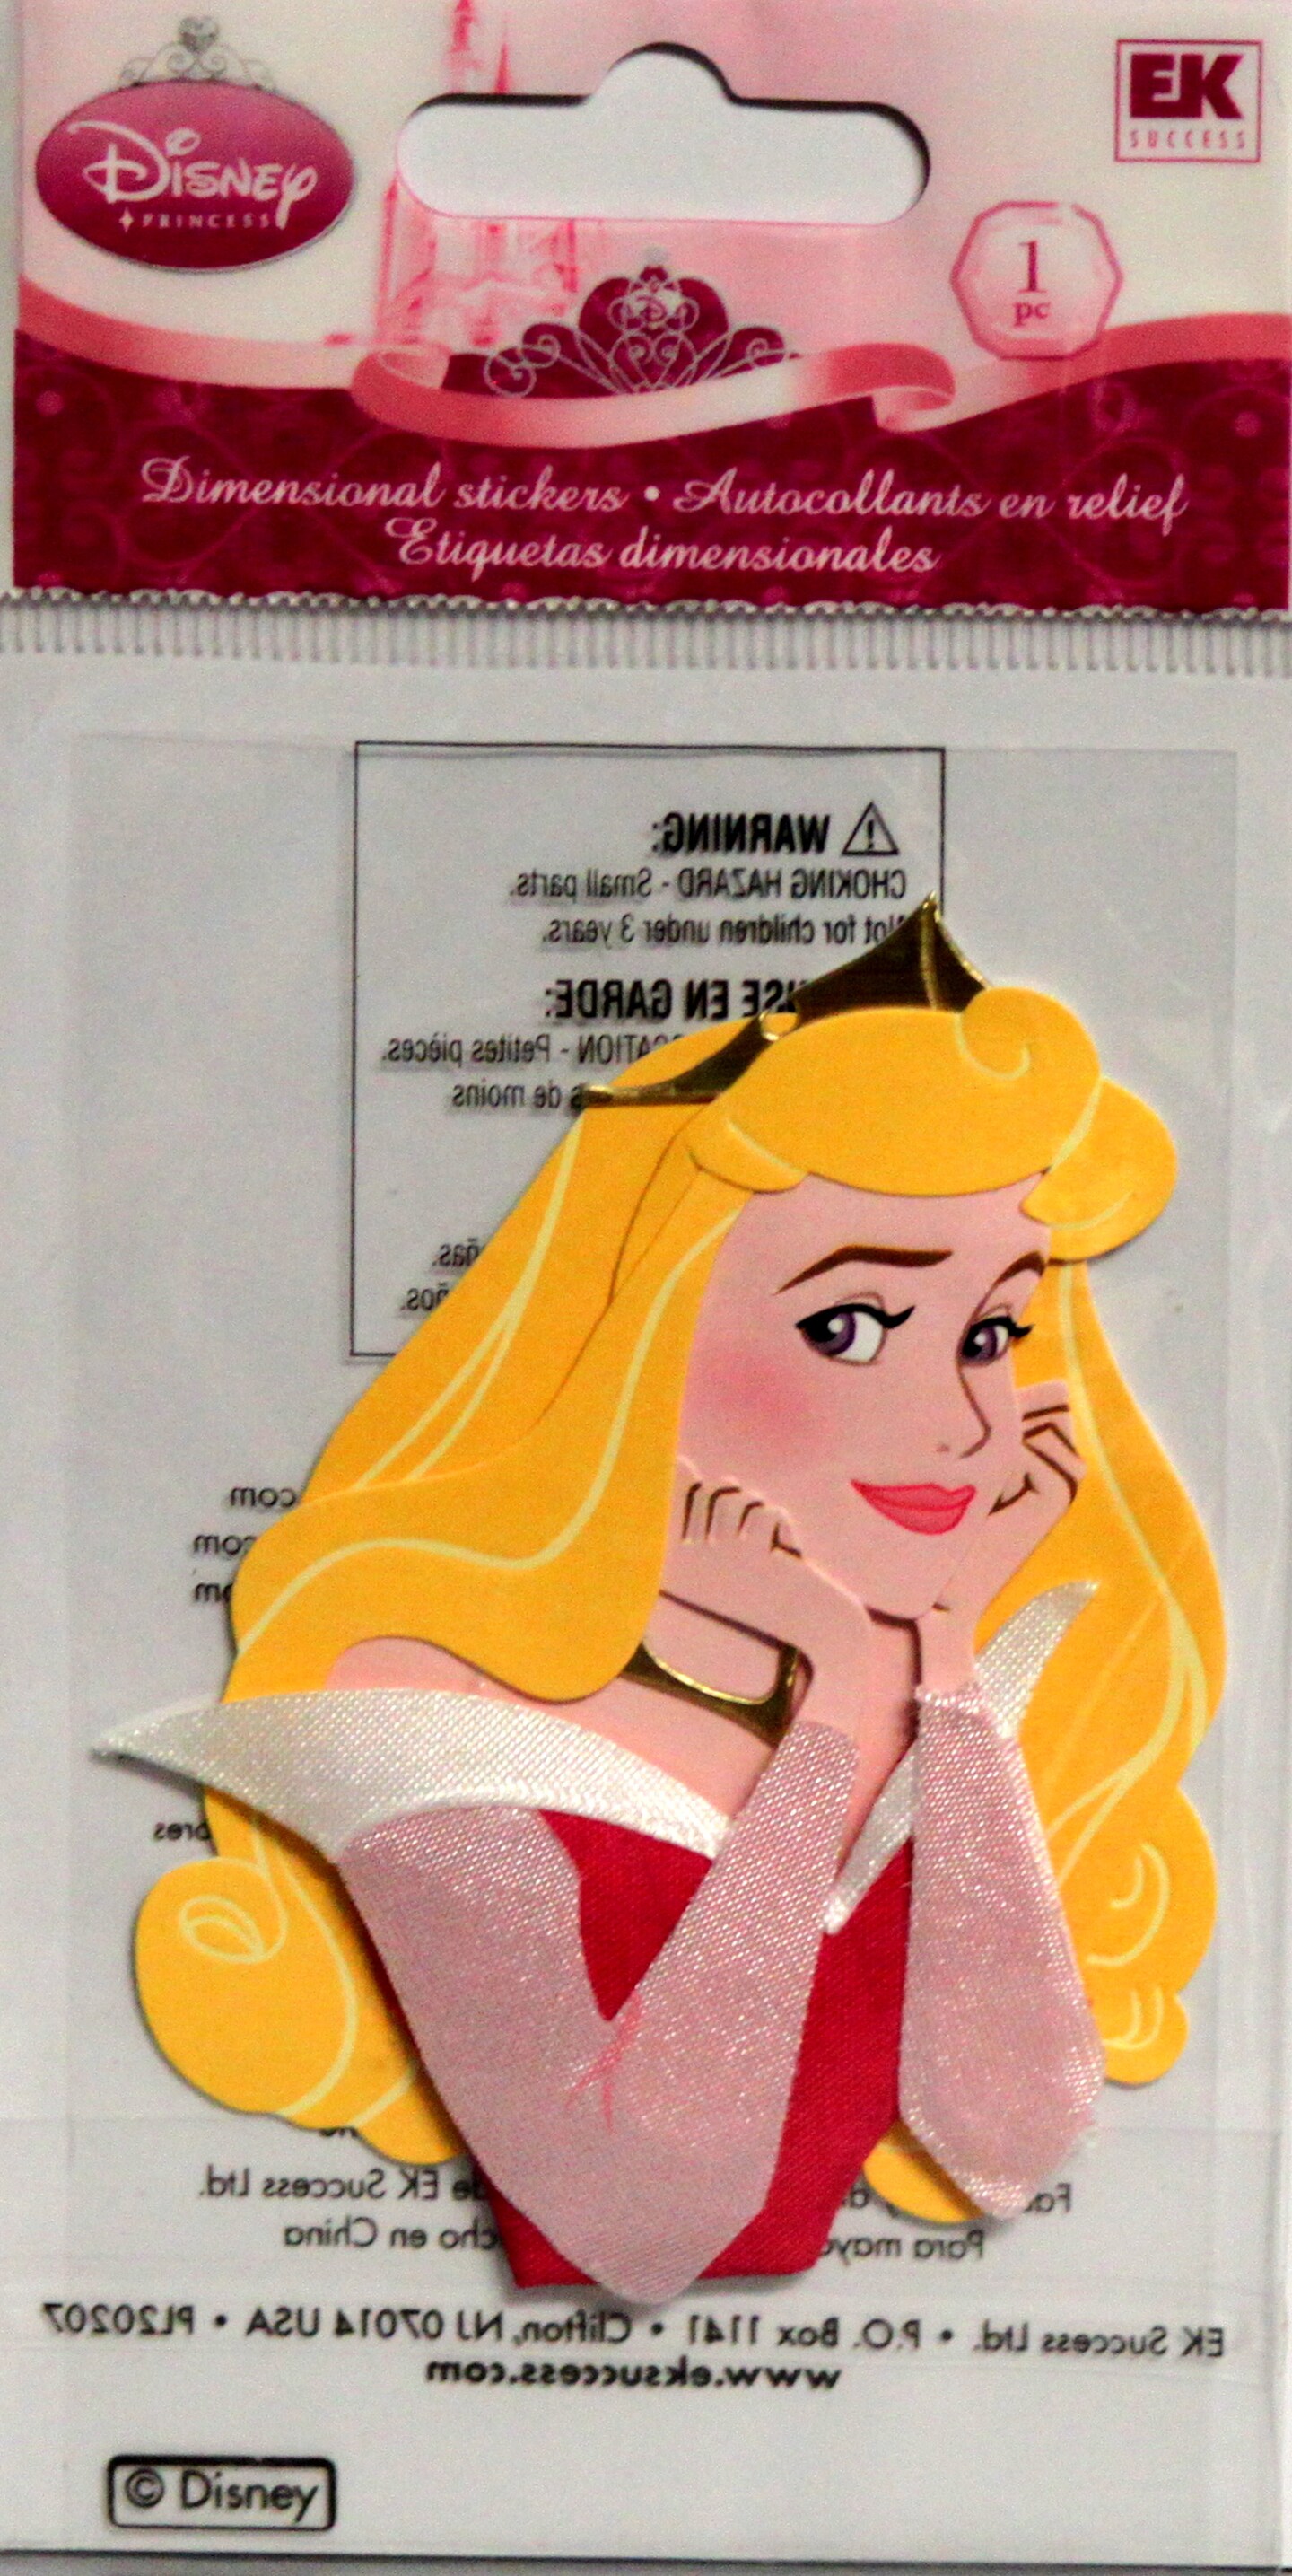 Disney Sleeping Beauty Dimensional Stickers